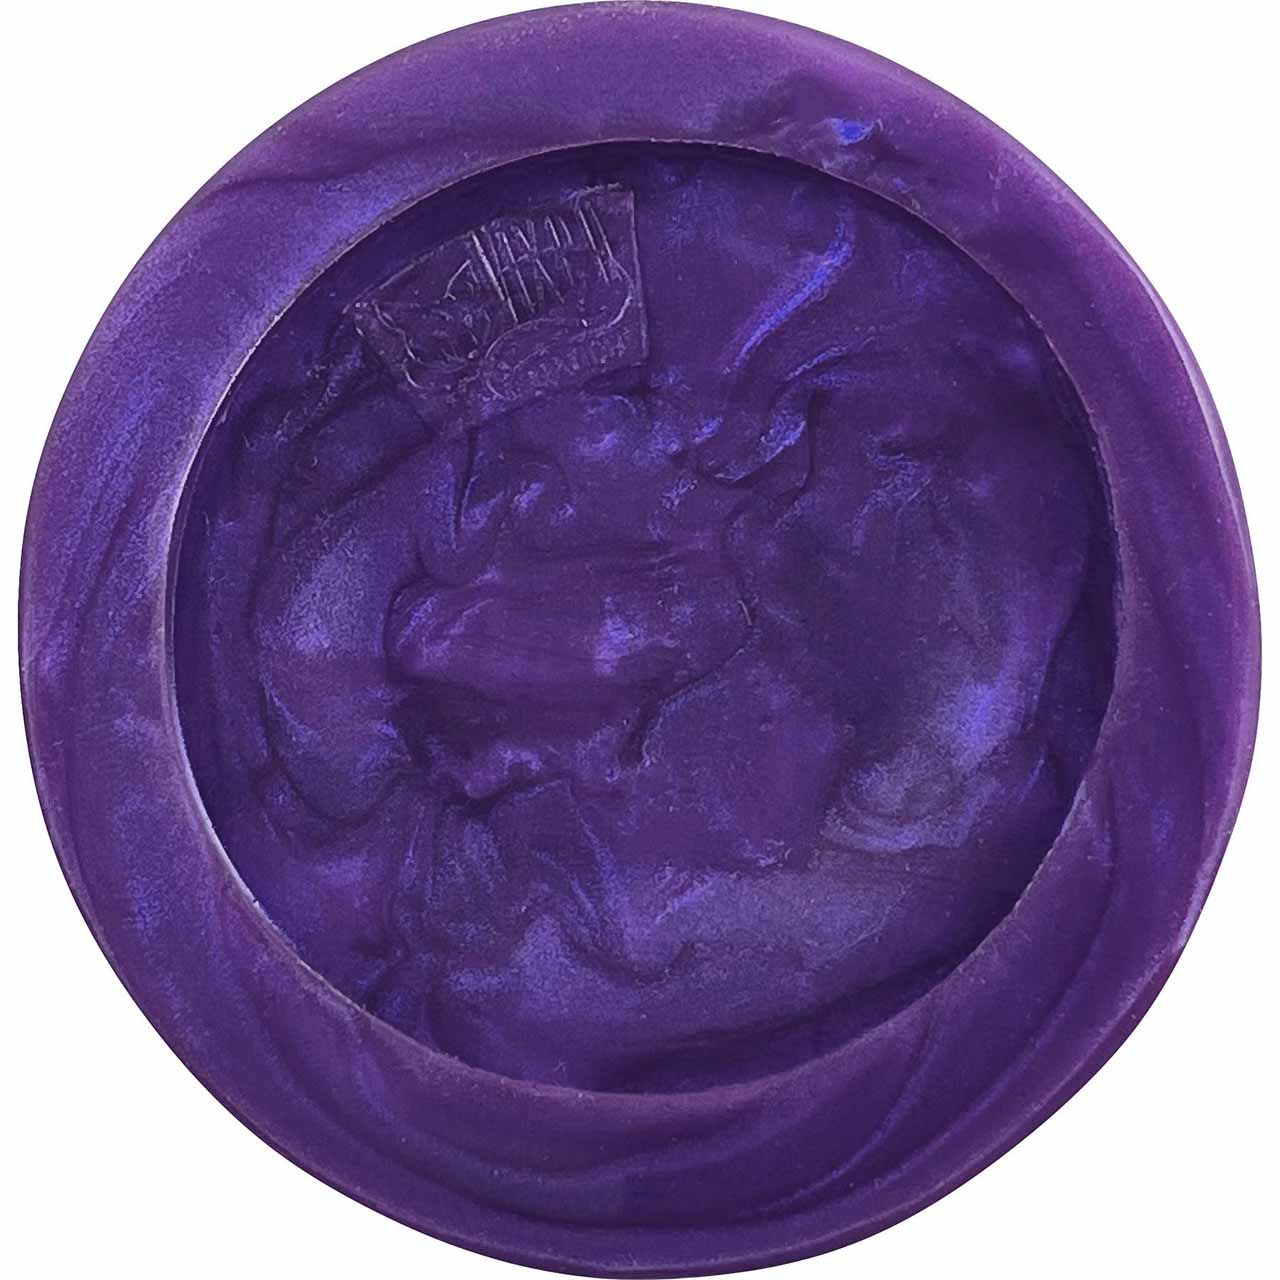 The base of the purple Medium Realistic Bent Dildo.